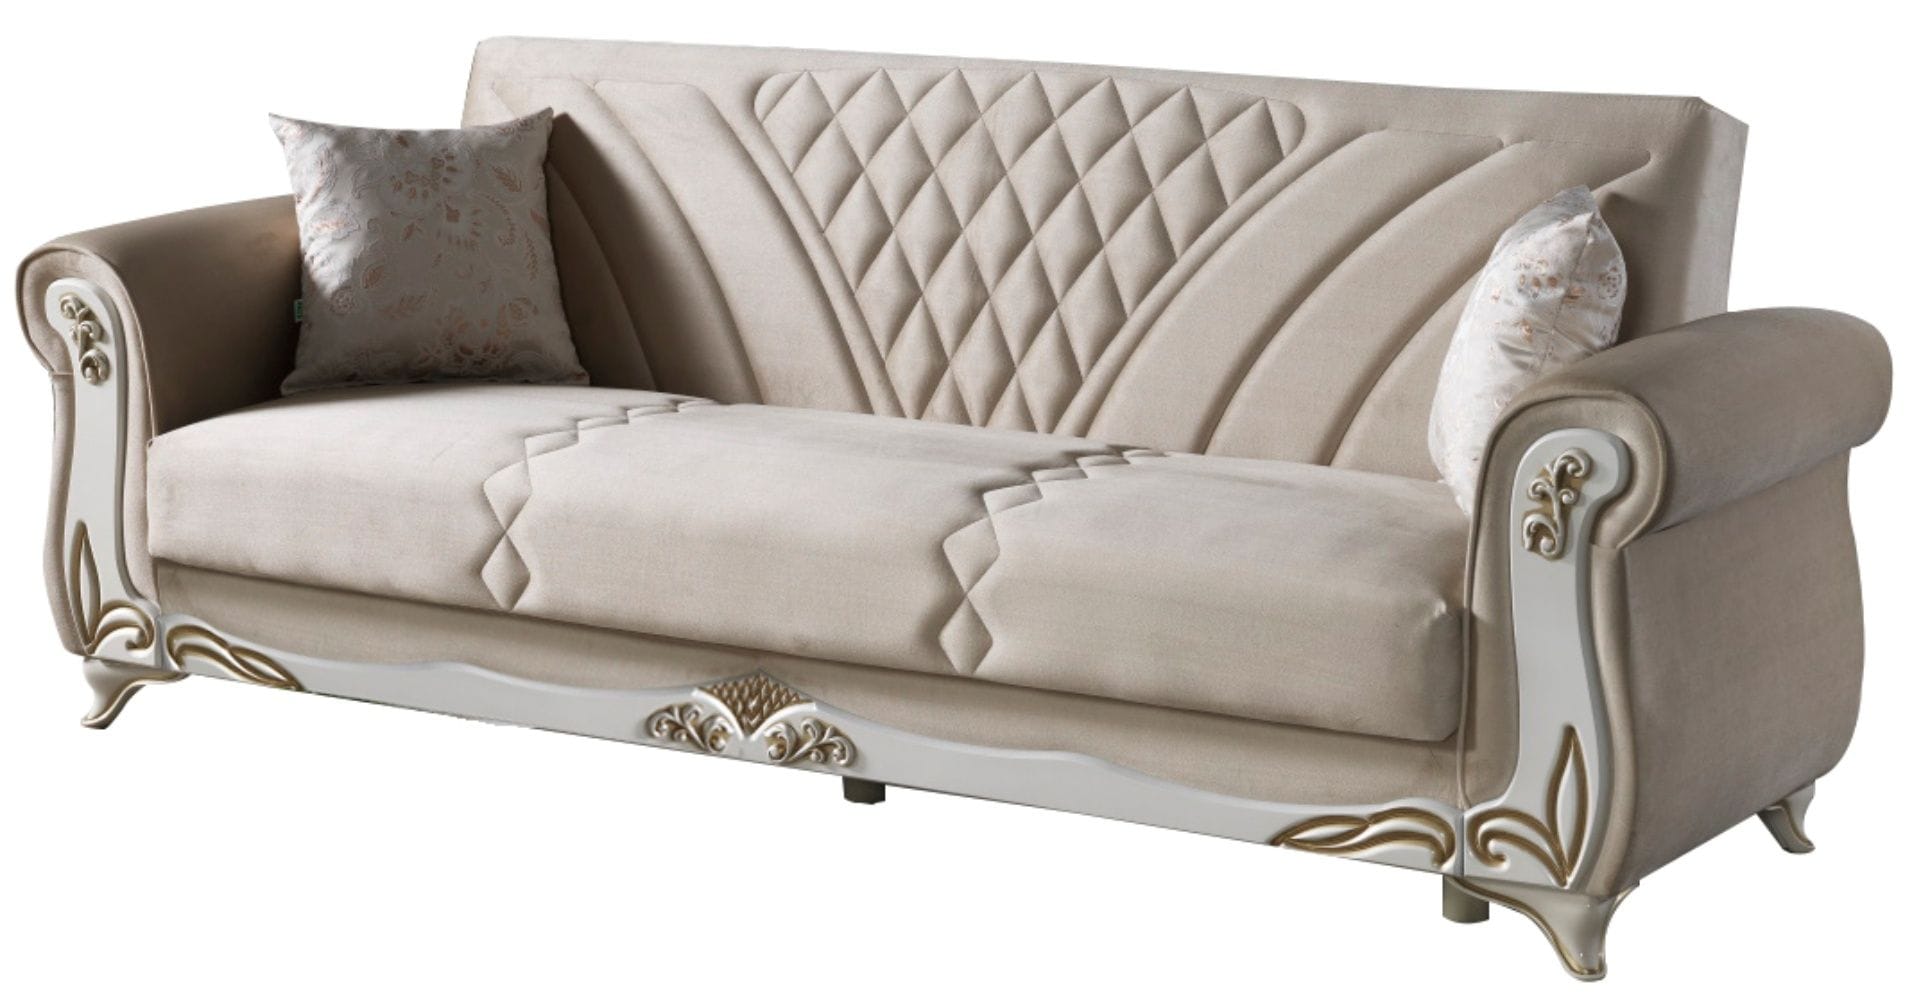 Asos Convertible Sofa Sleeper, Khaki Beige by Furnia Furniture